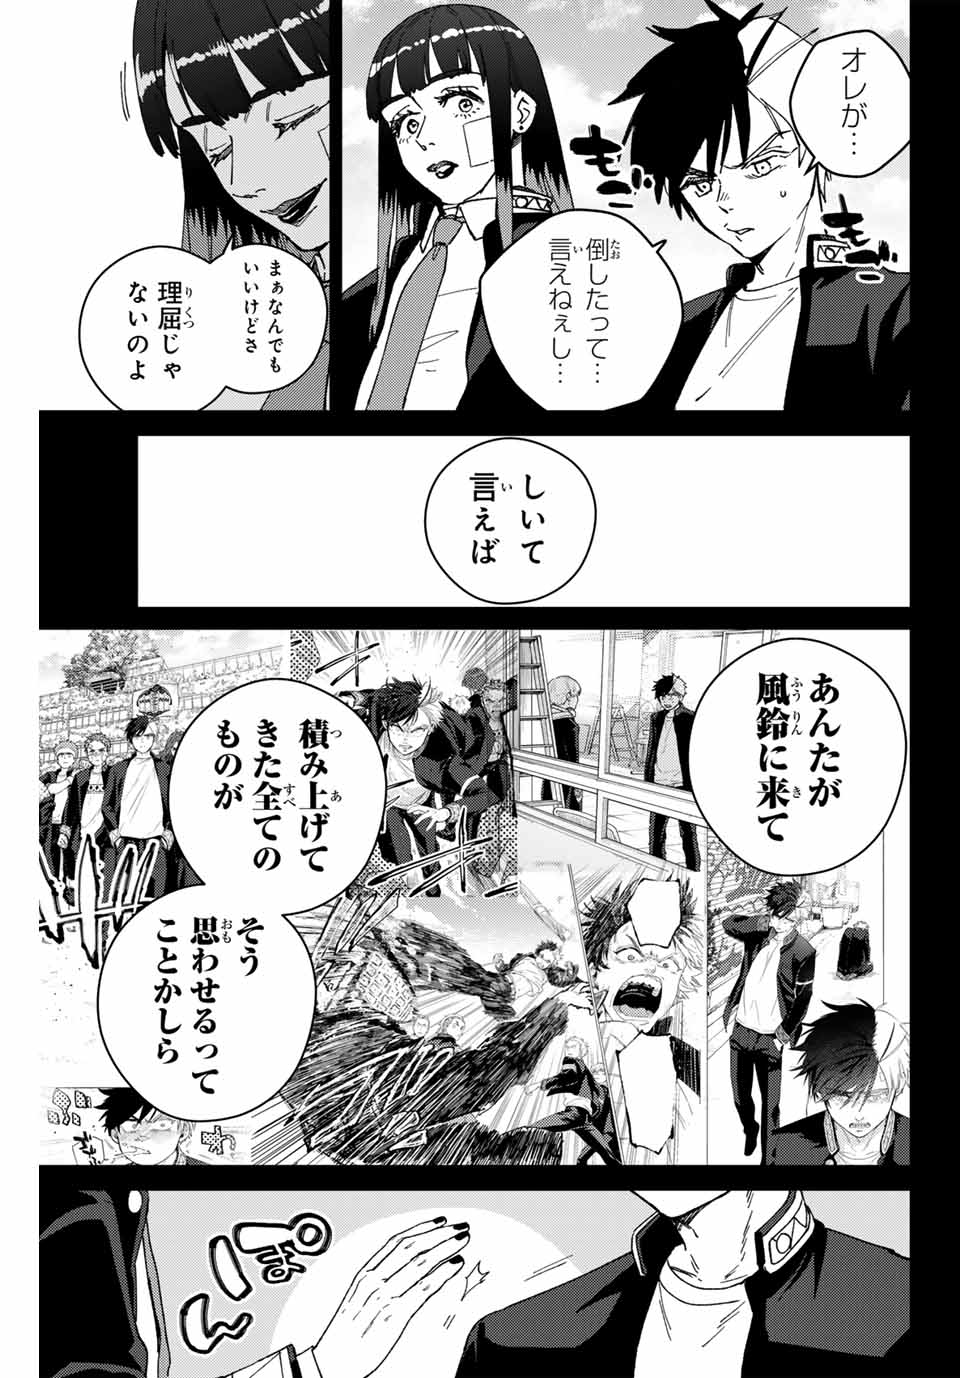 Wind Breaker (NII Satoru) - Chapter 138 - Page 7